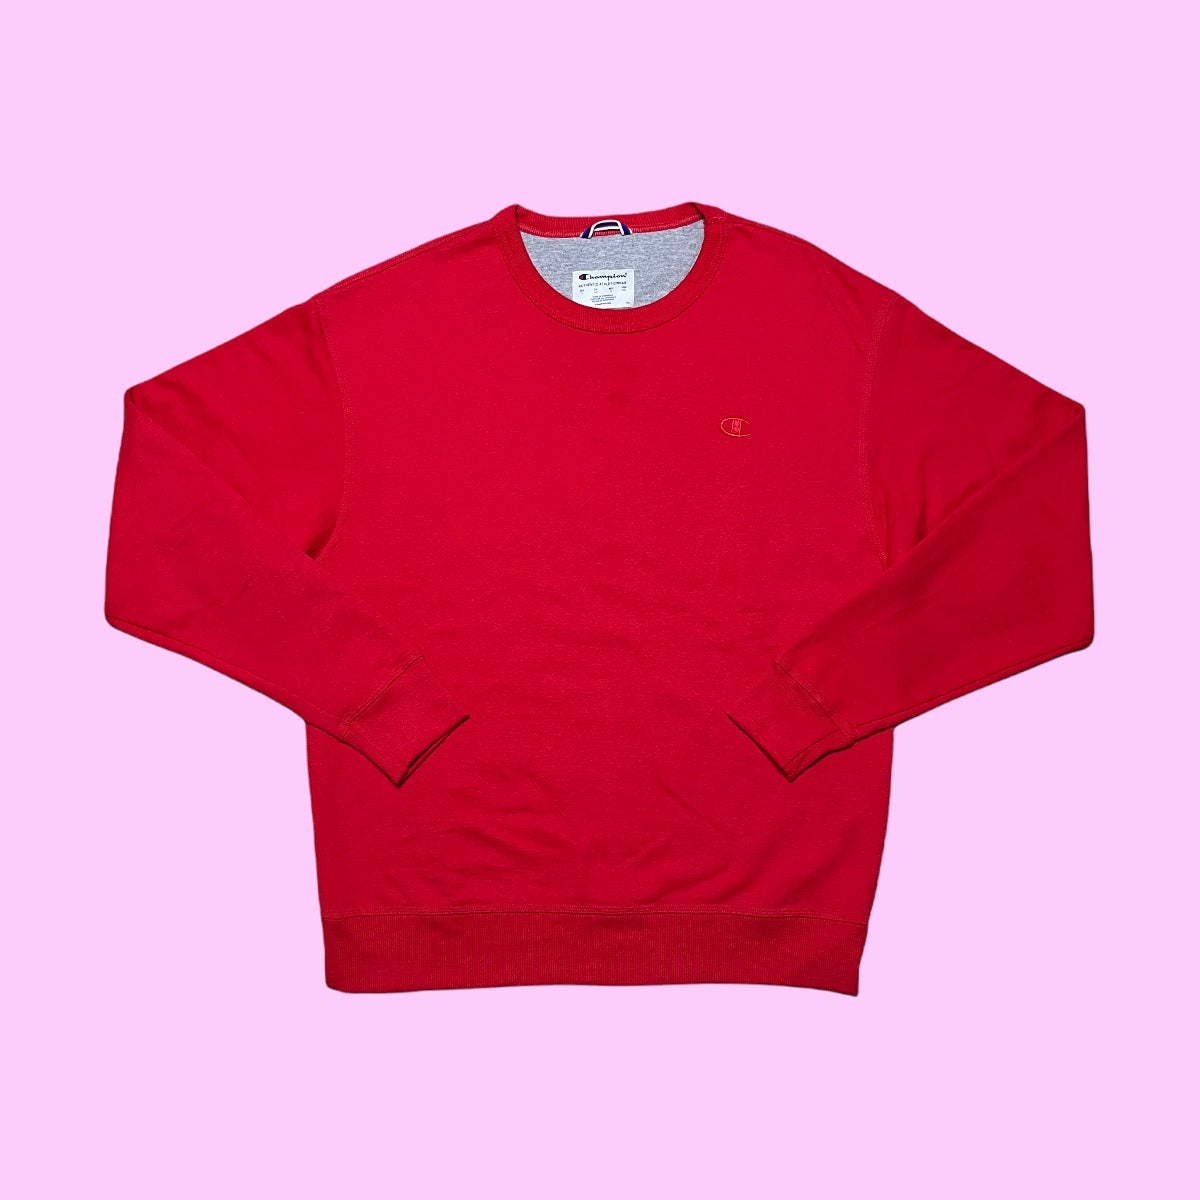 Vintage Champion Sweater - L